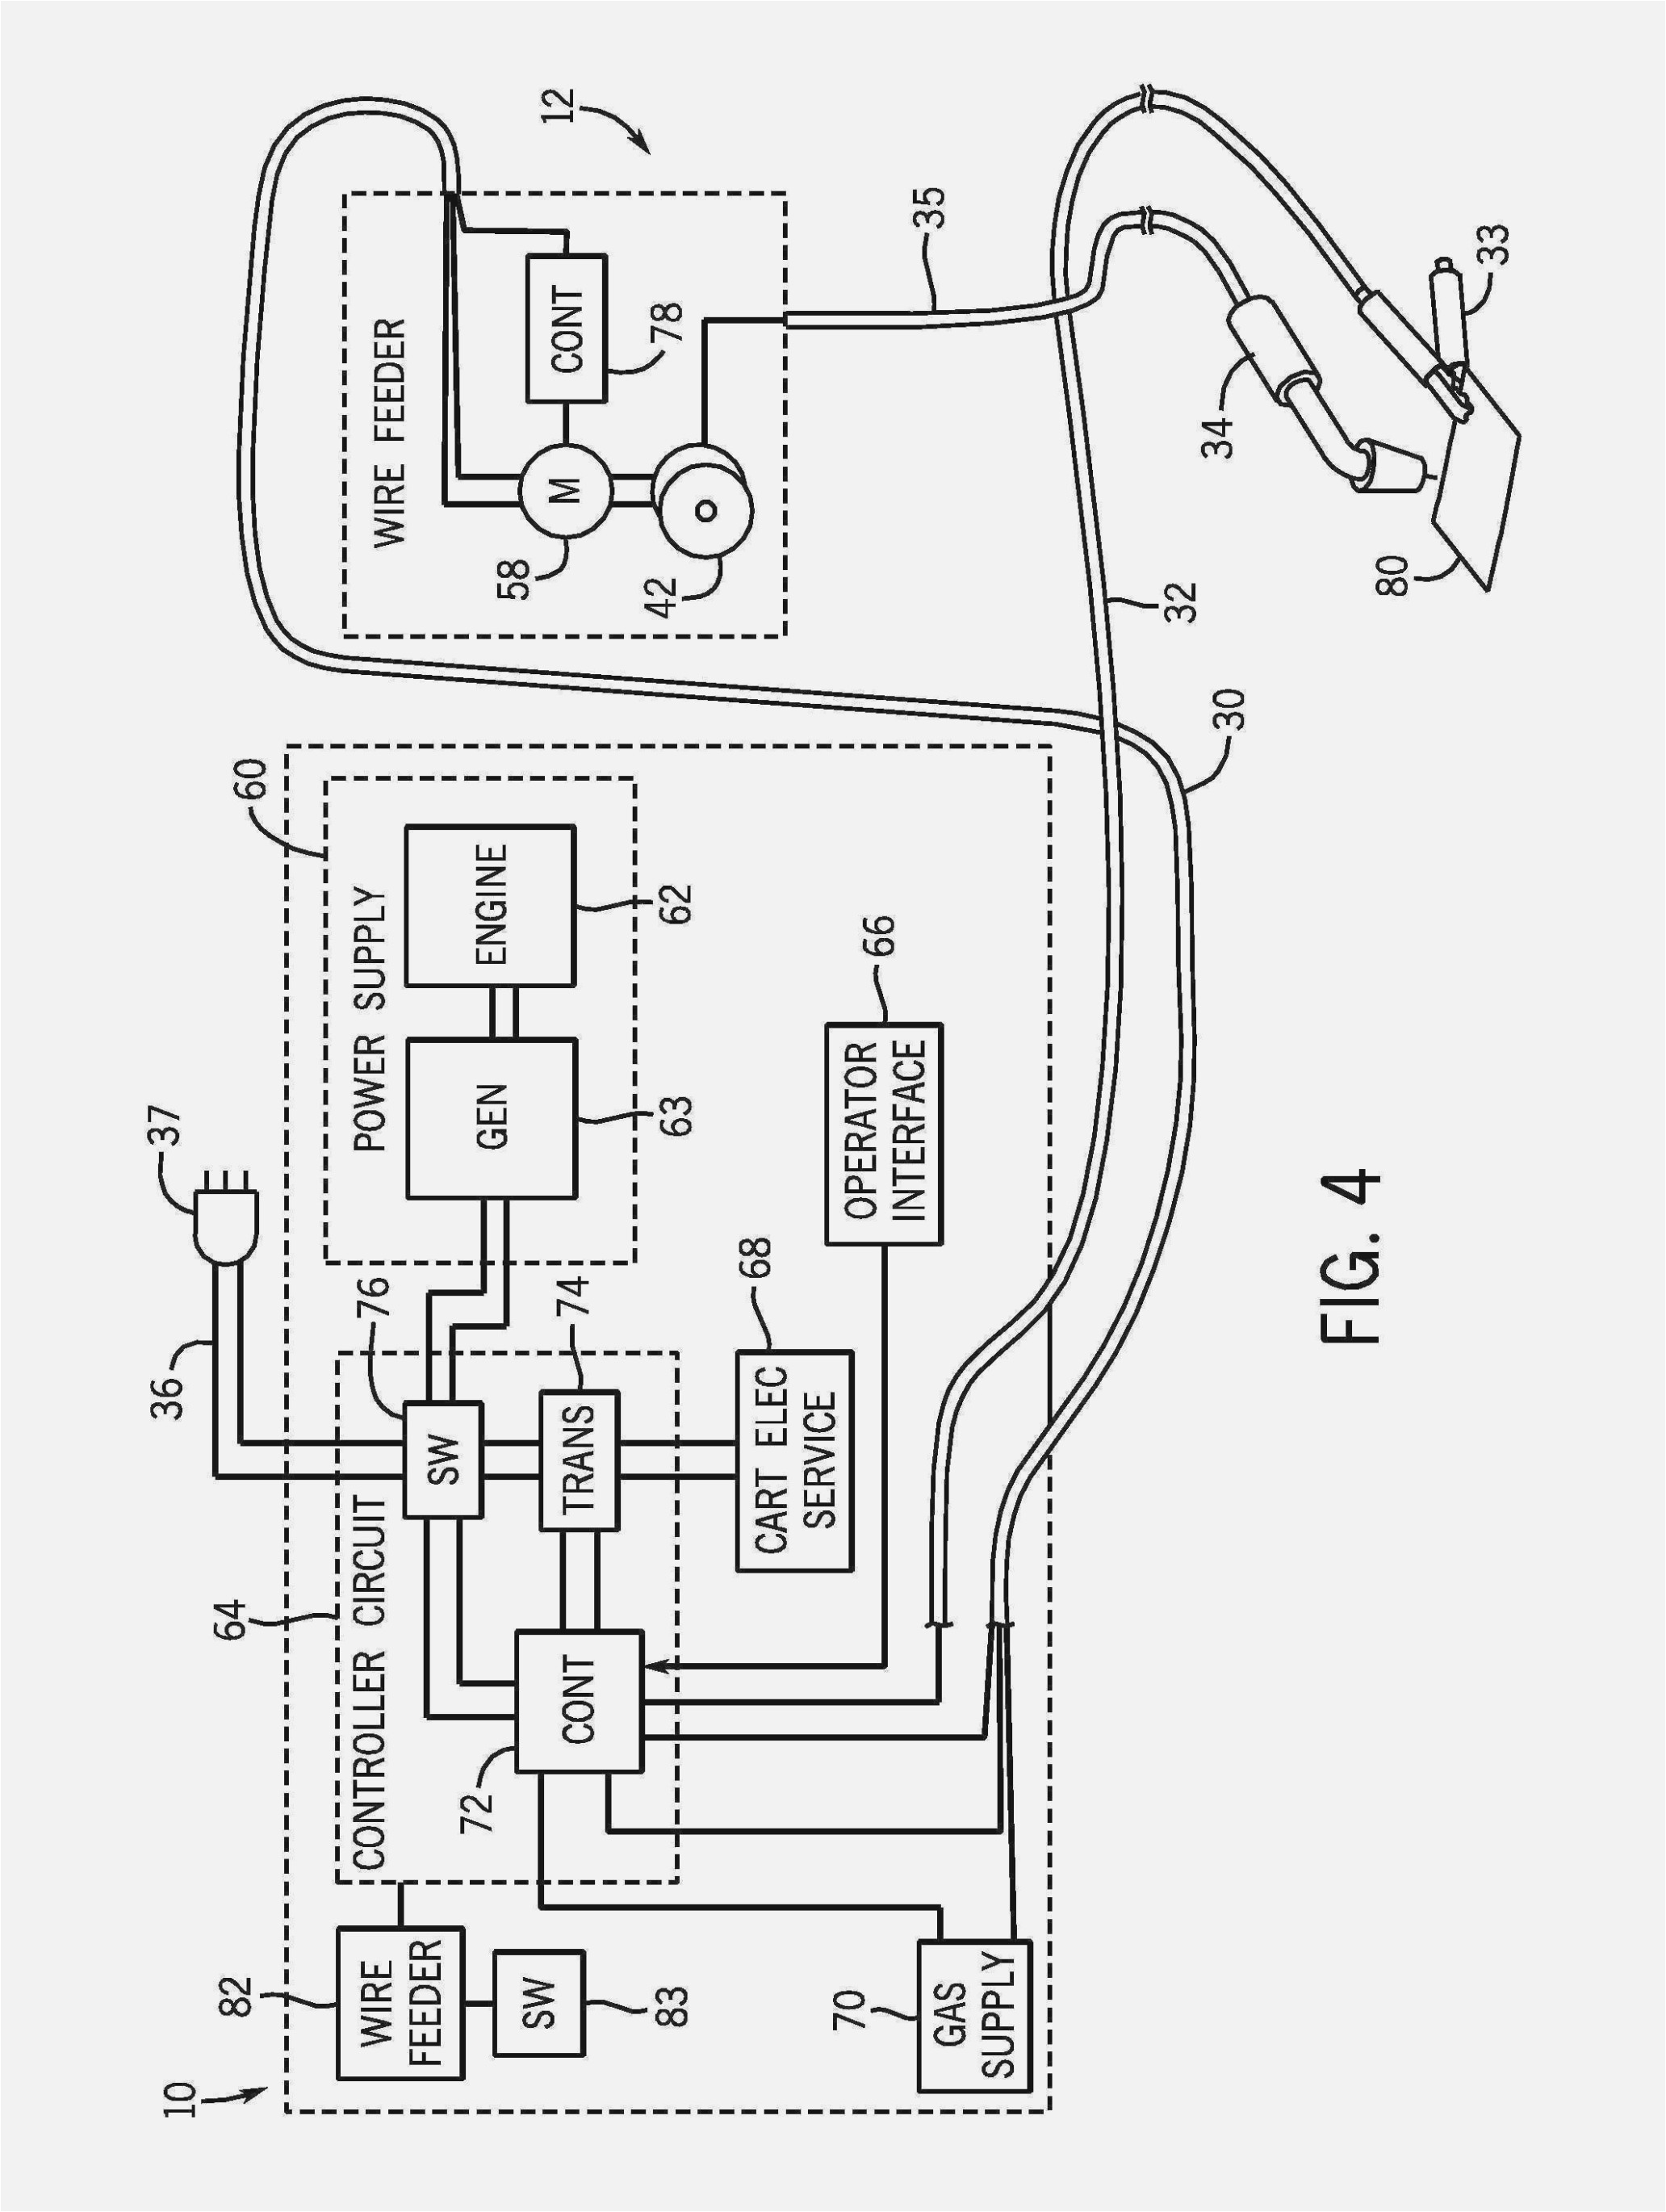 lincoln welder engine diagram wiring diagram used oxford arc welder wiring diagram arc welder wiring diagram